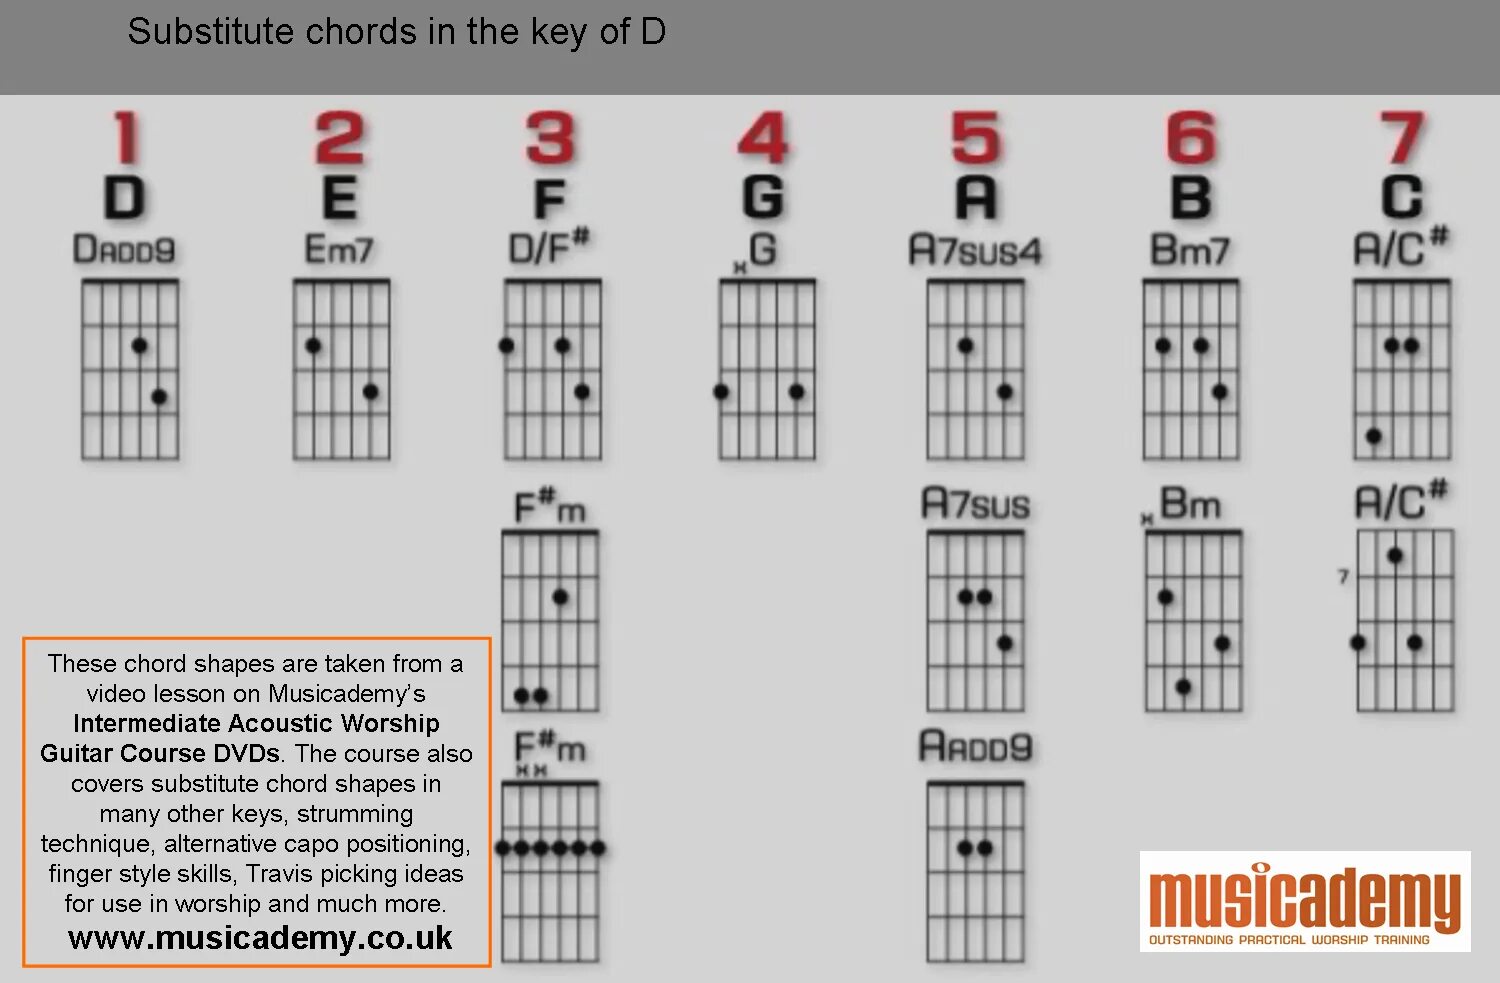 Таблица аккордов для начинающих. Аккорд c на гитаре 6 струн. Аппликатура гитары 6 струн. Аккорды на гитаре 6 струн. Аккорды на 6 струнной гитаре.